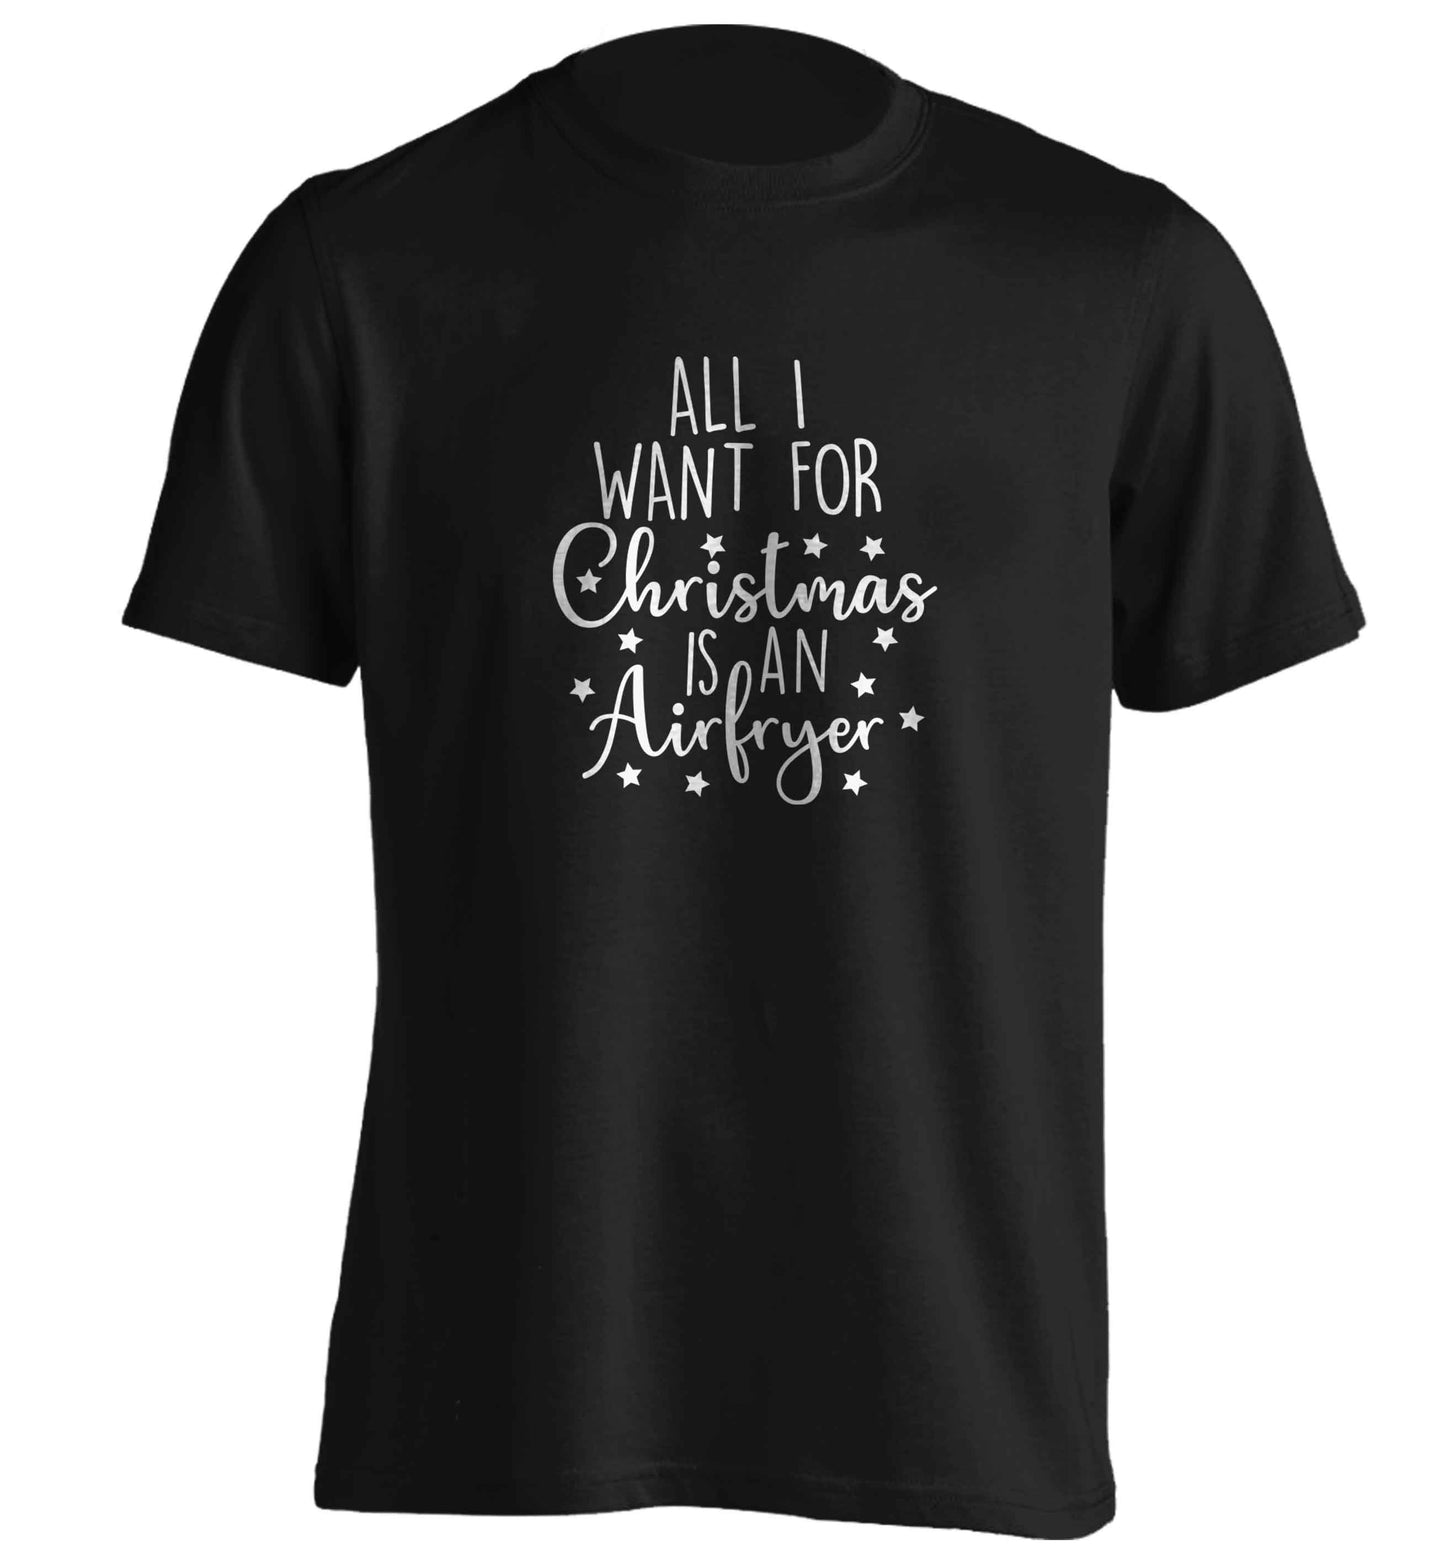 All I want for Christmas is an airfryeradults unisex black Tshirt 2XL